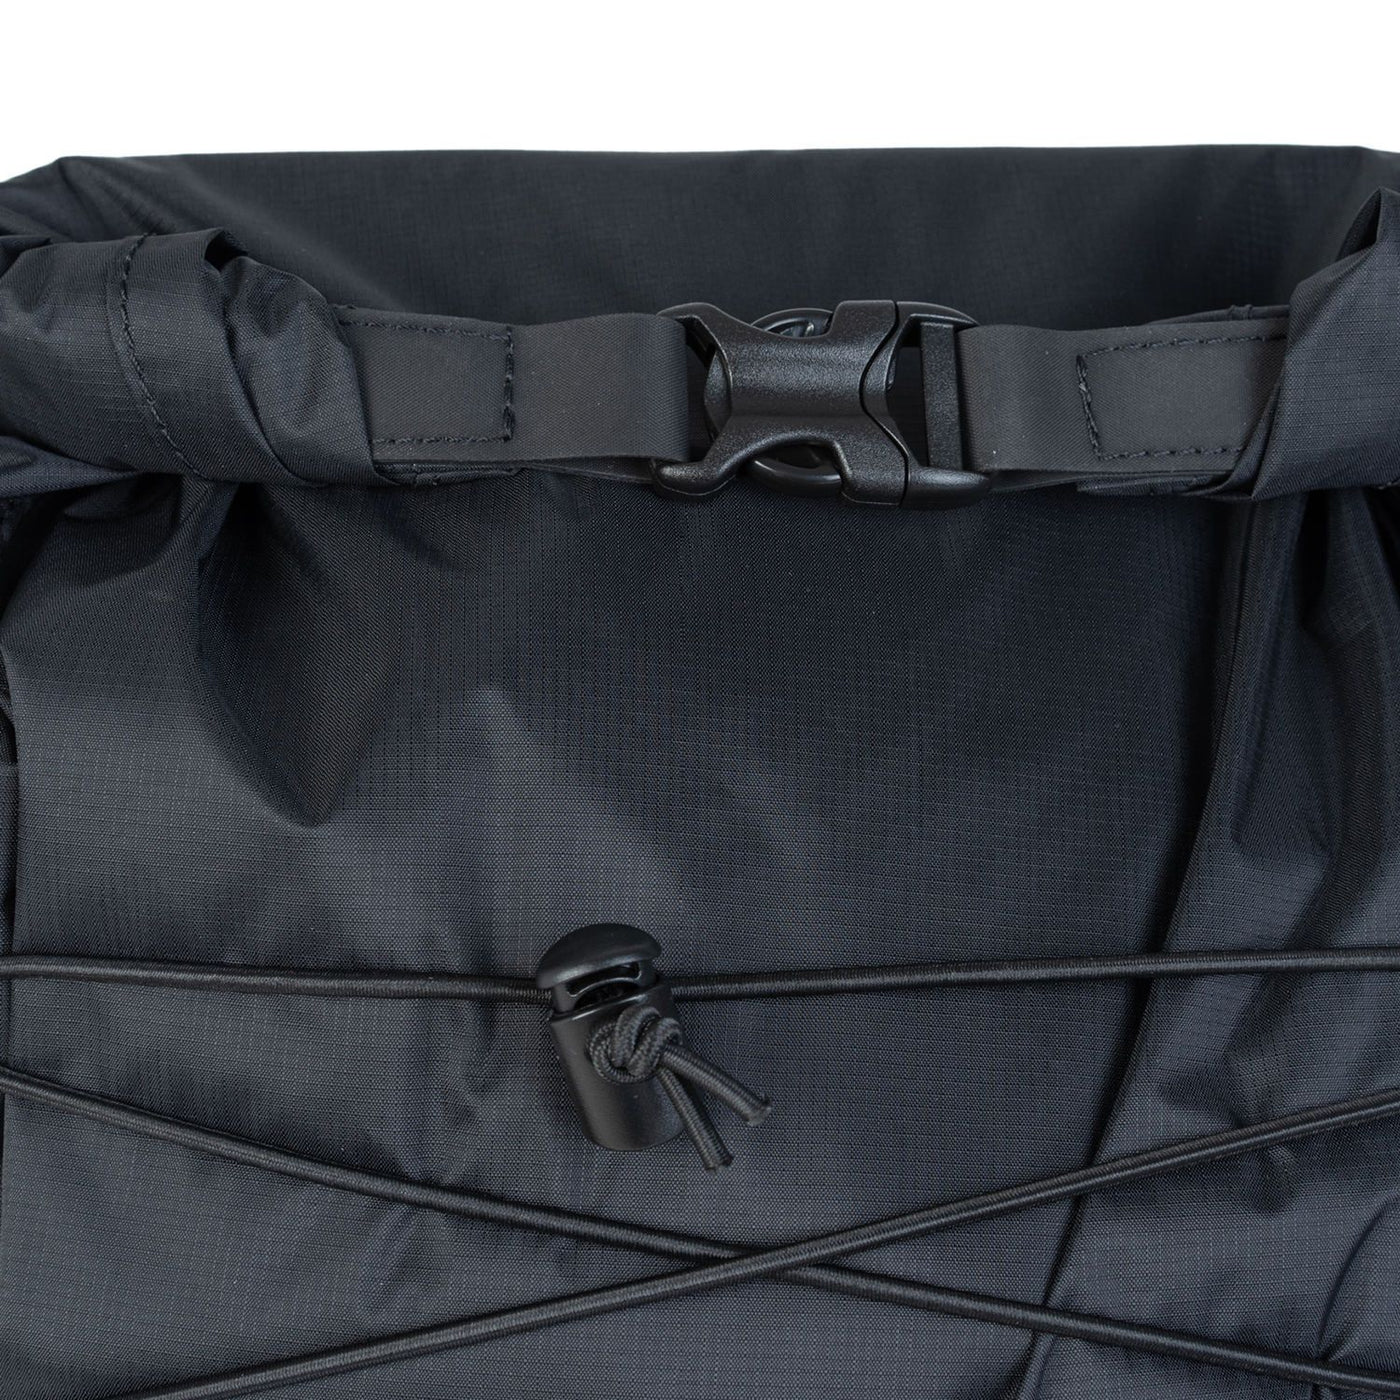 ADV Dry Waterproof Backpack - 30L Absolute Black 